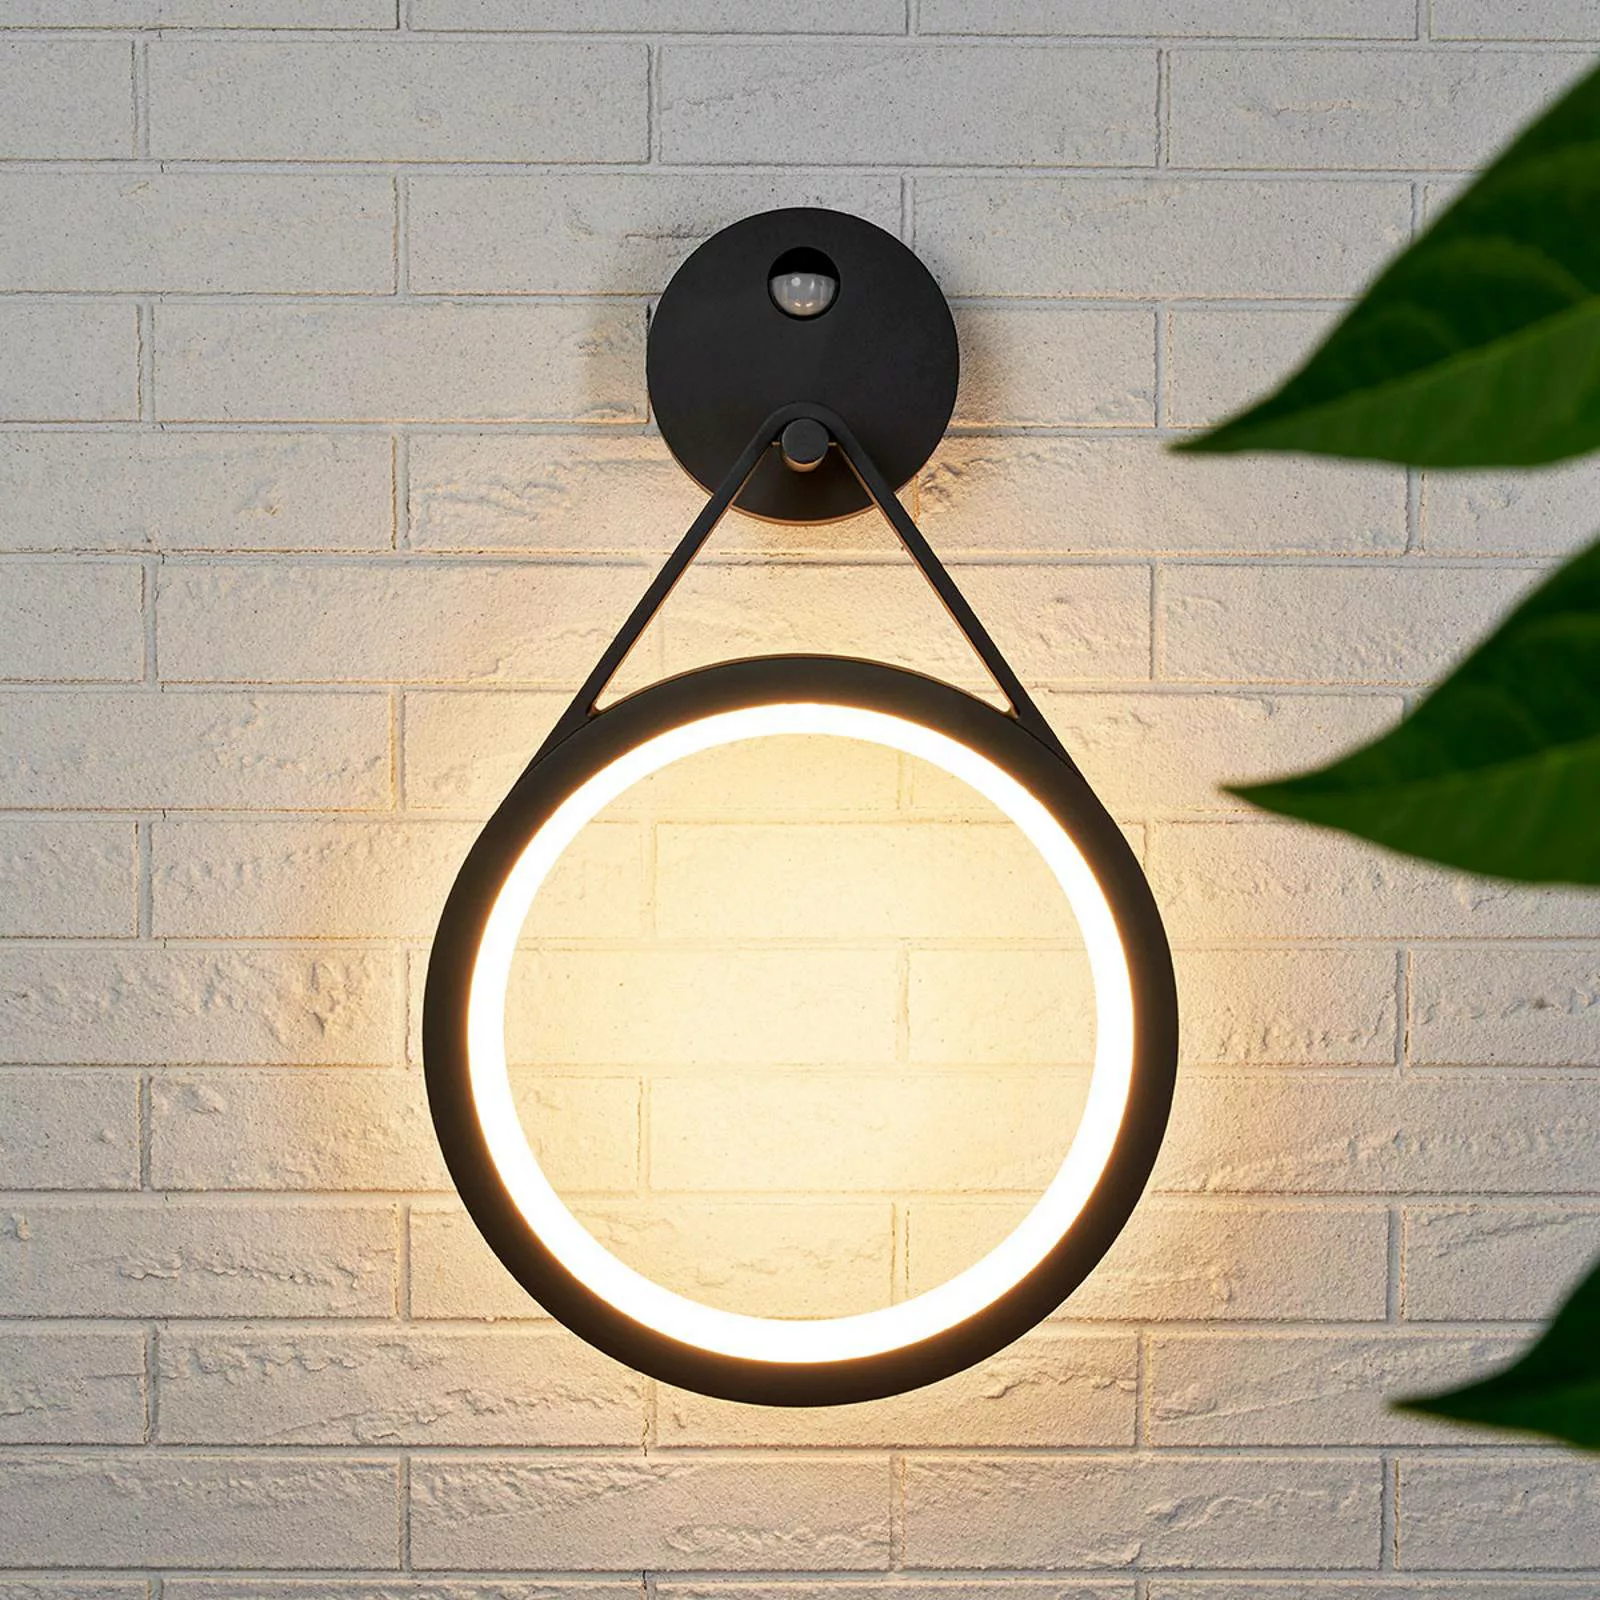 LED-Außenwandlampe Mirco mit Sensor, ringförmig günstig online kaufen